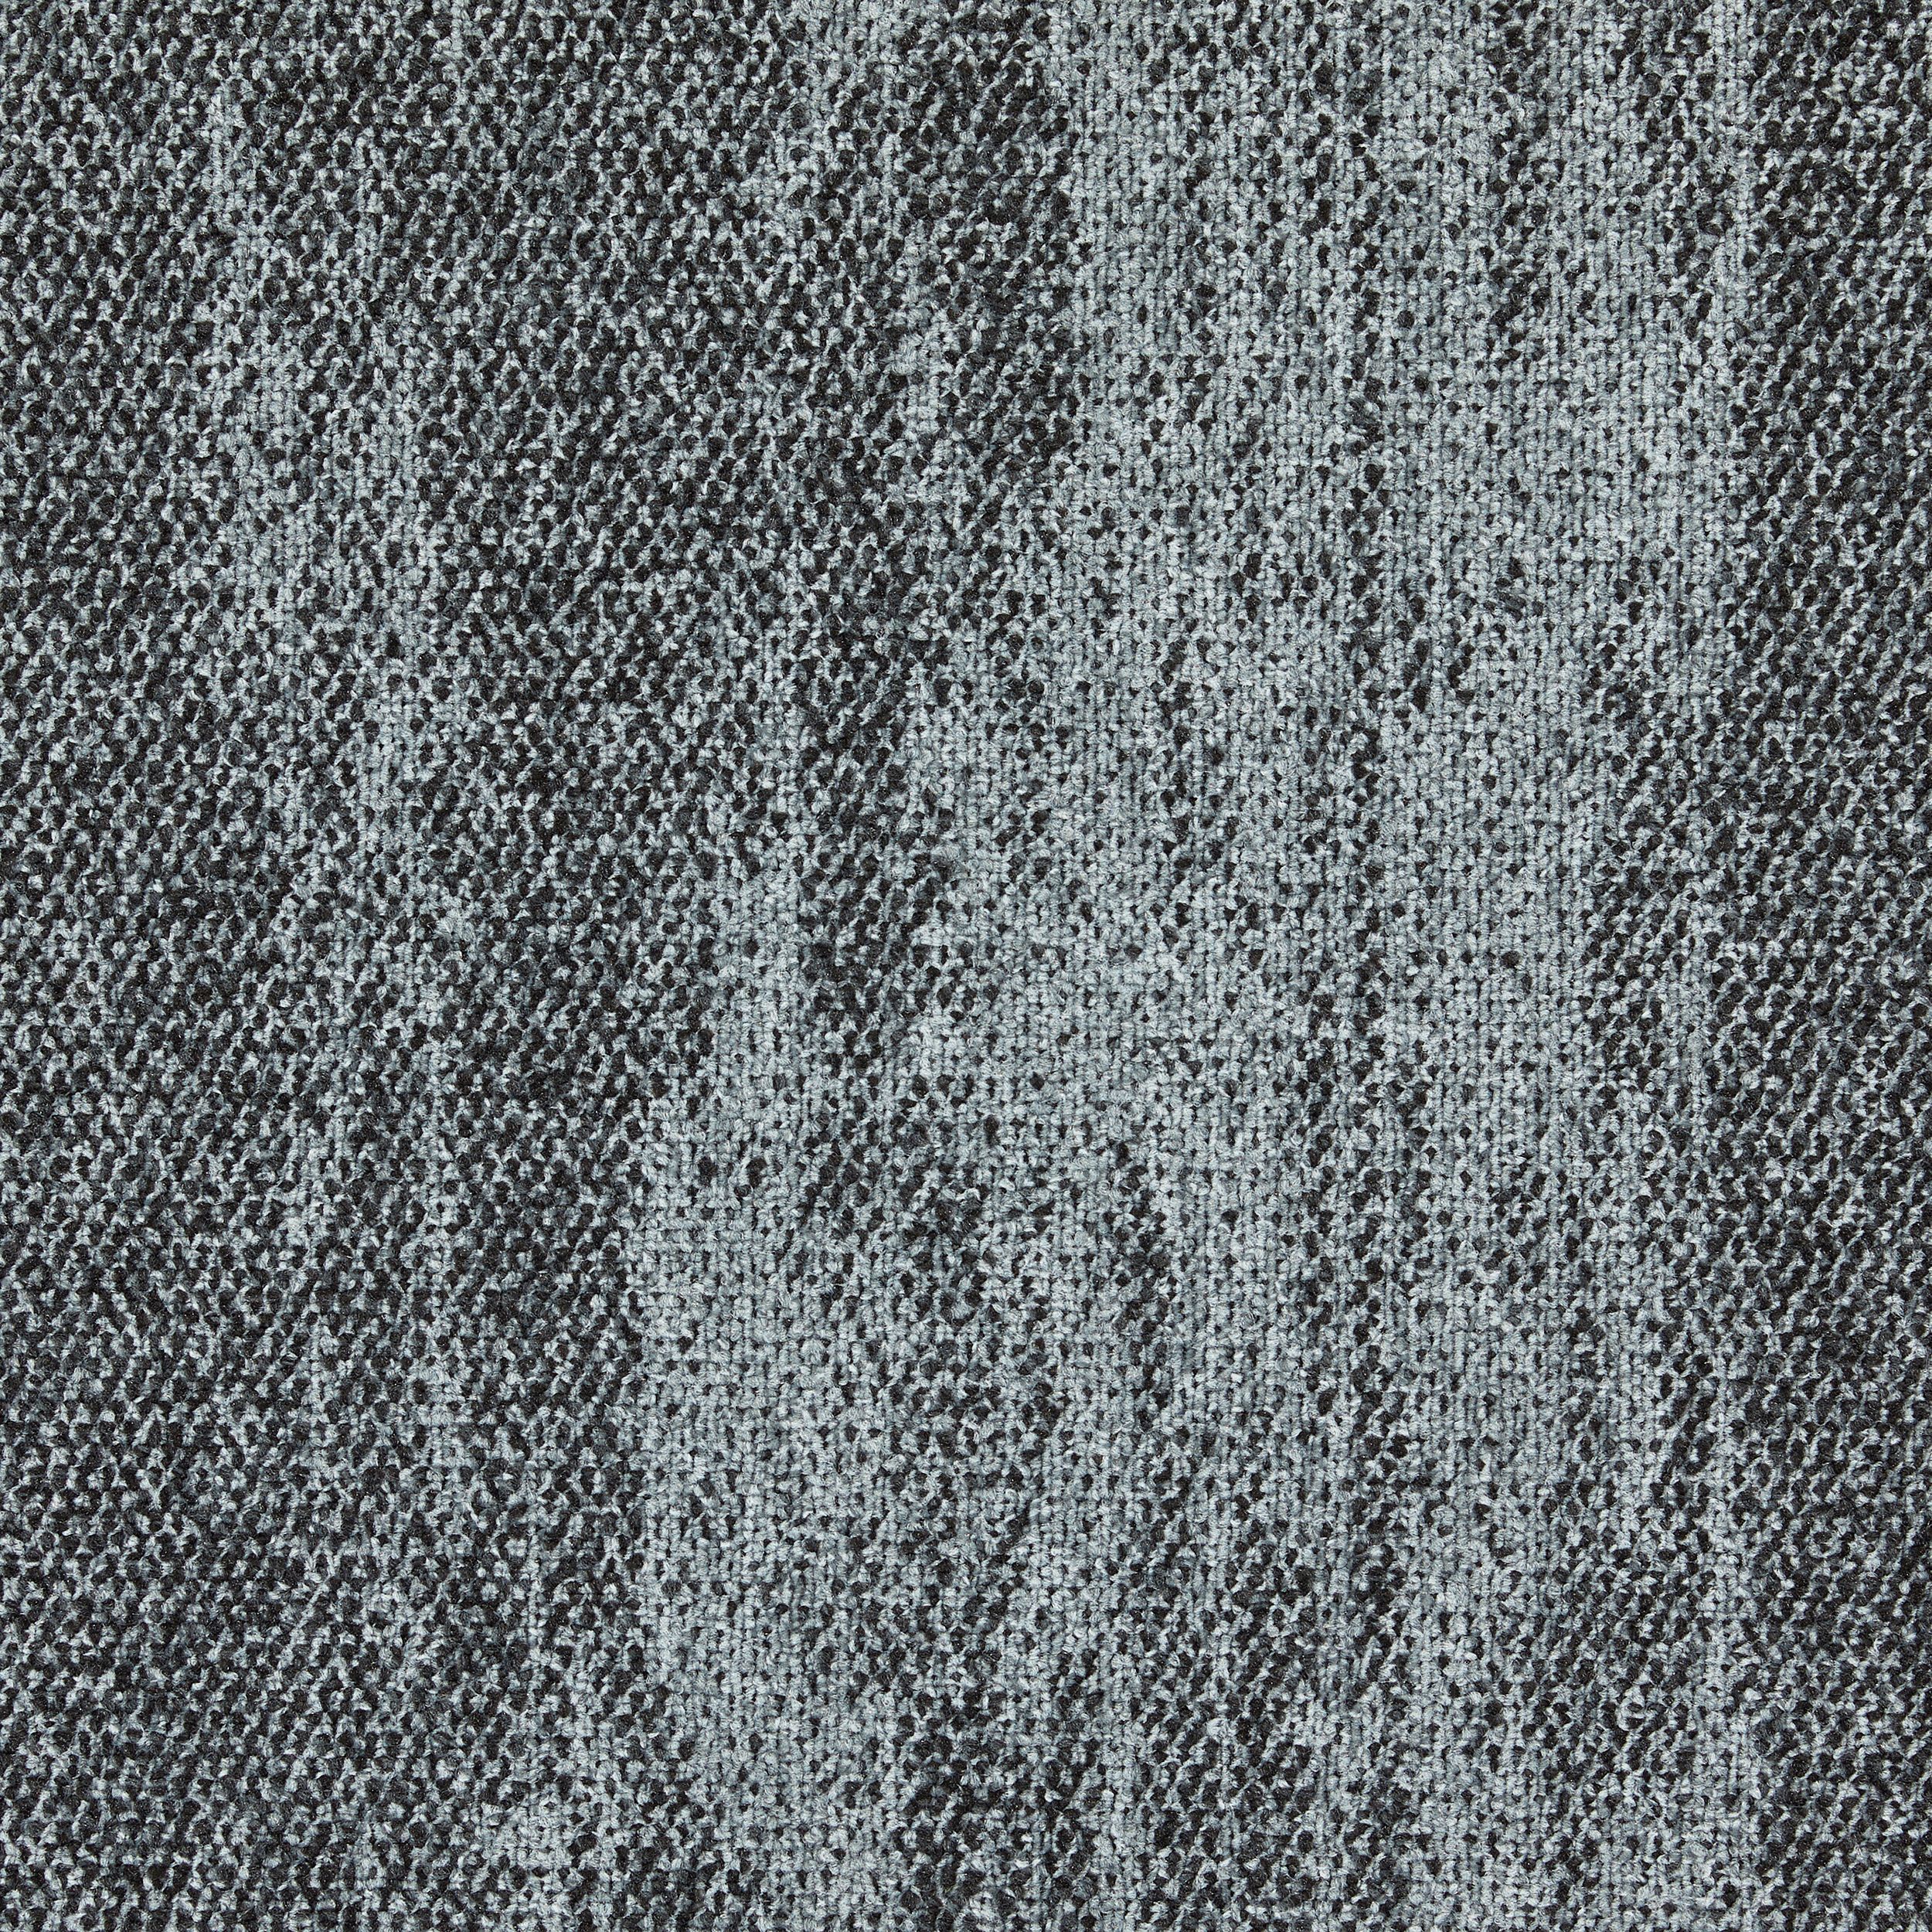 Works Flow Carpet Tile In Pebble afbeeldingnummer 2